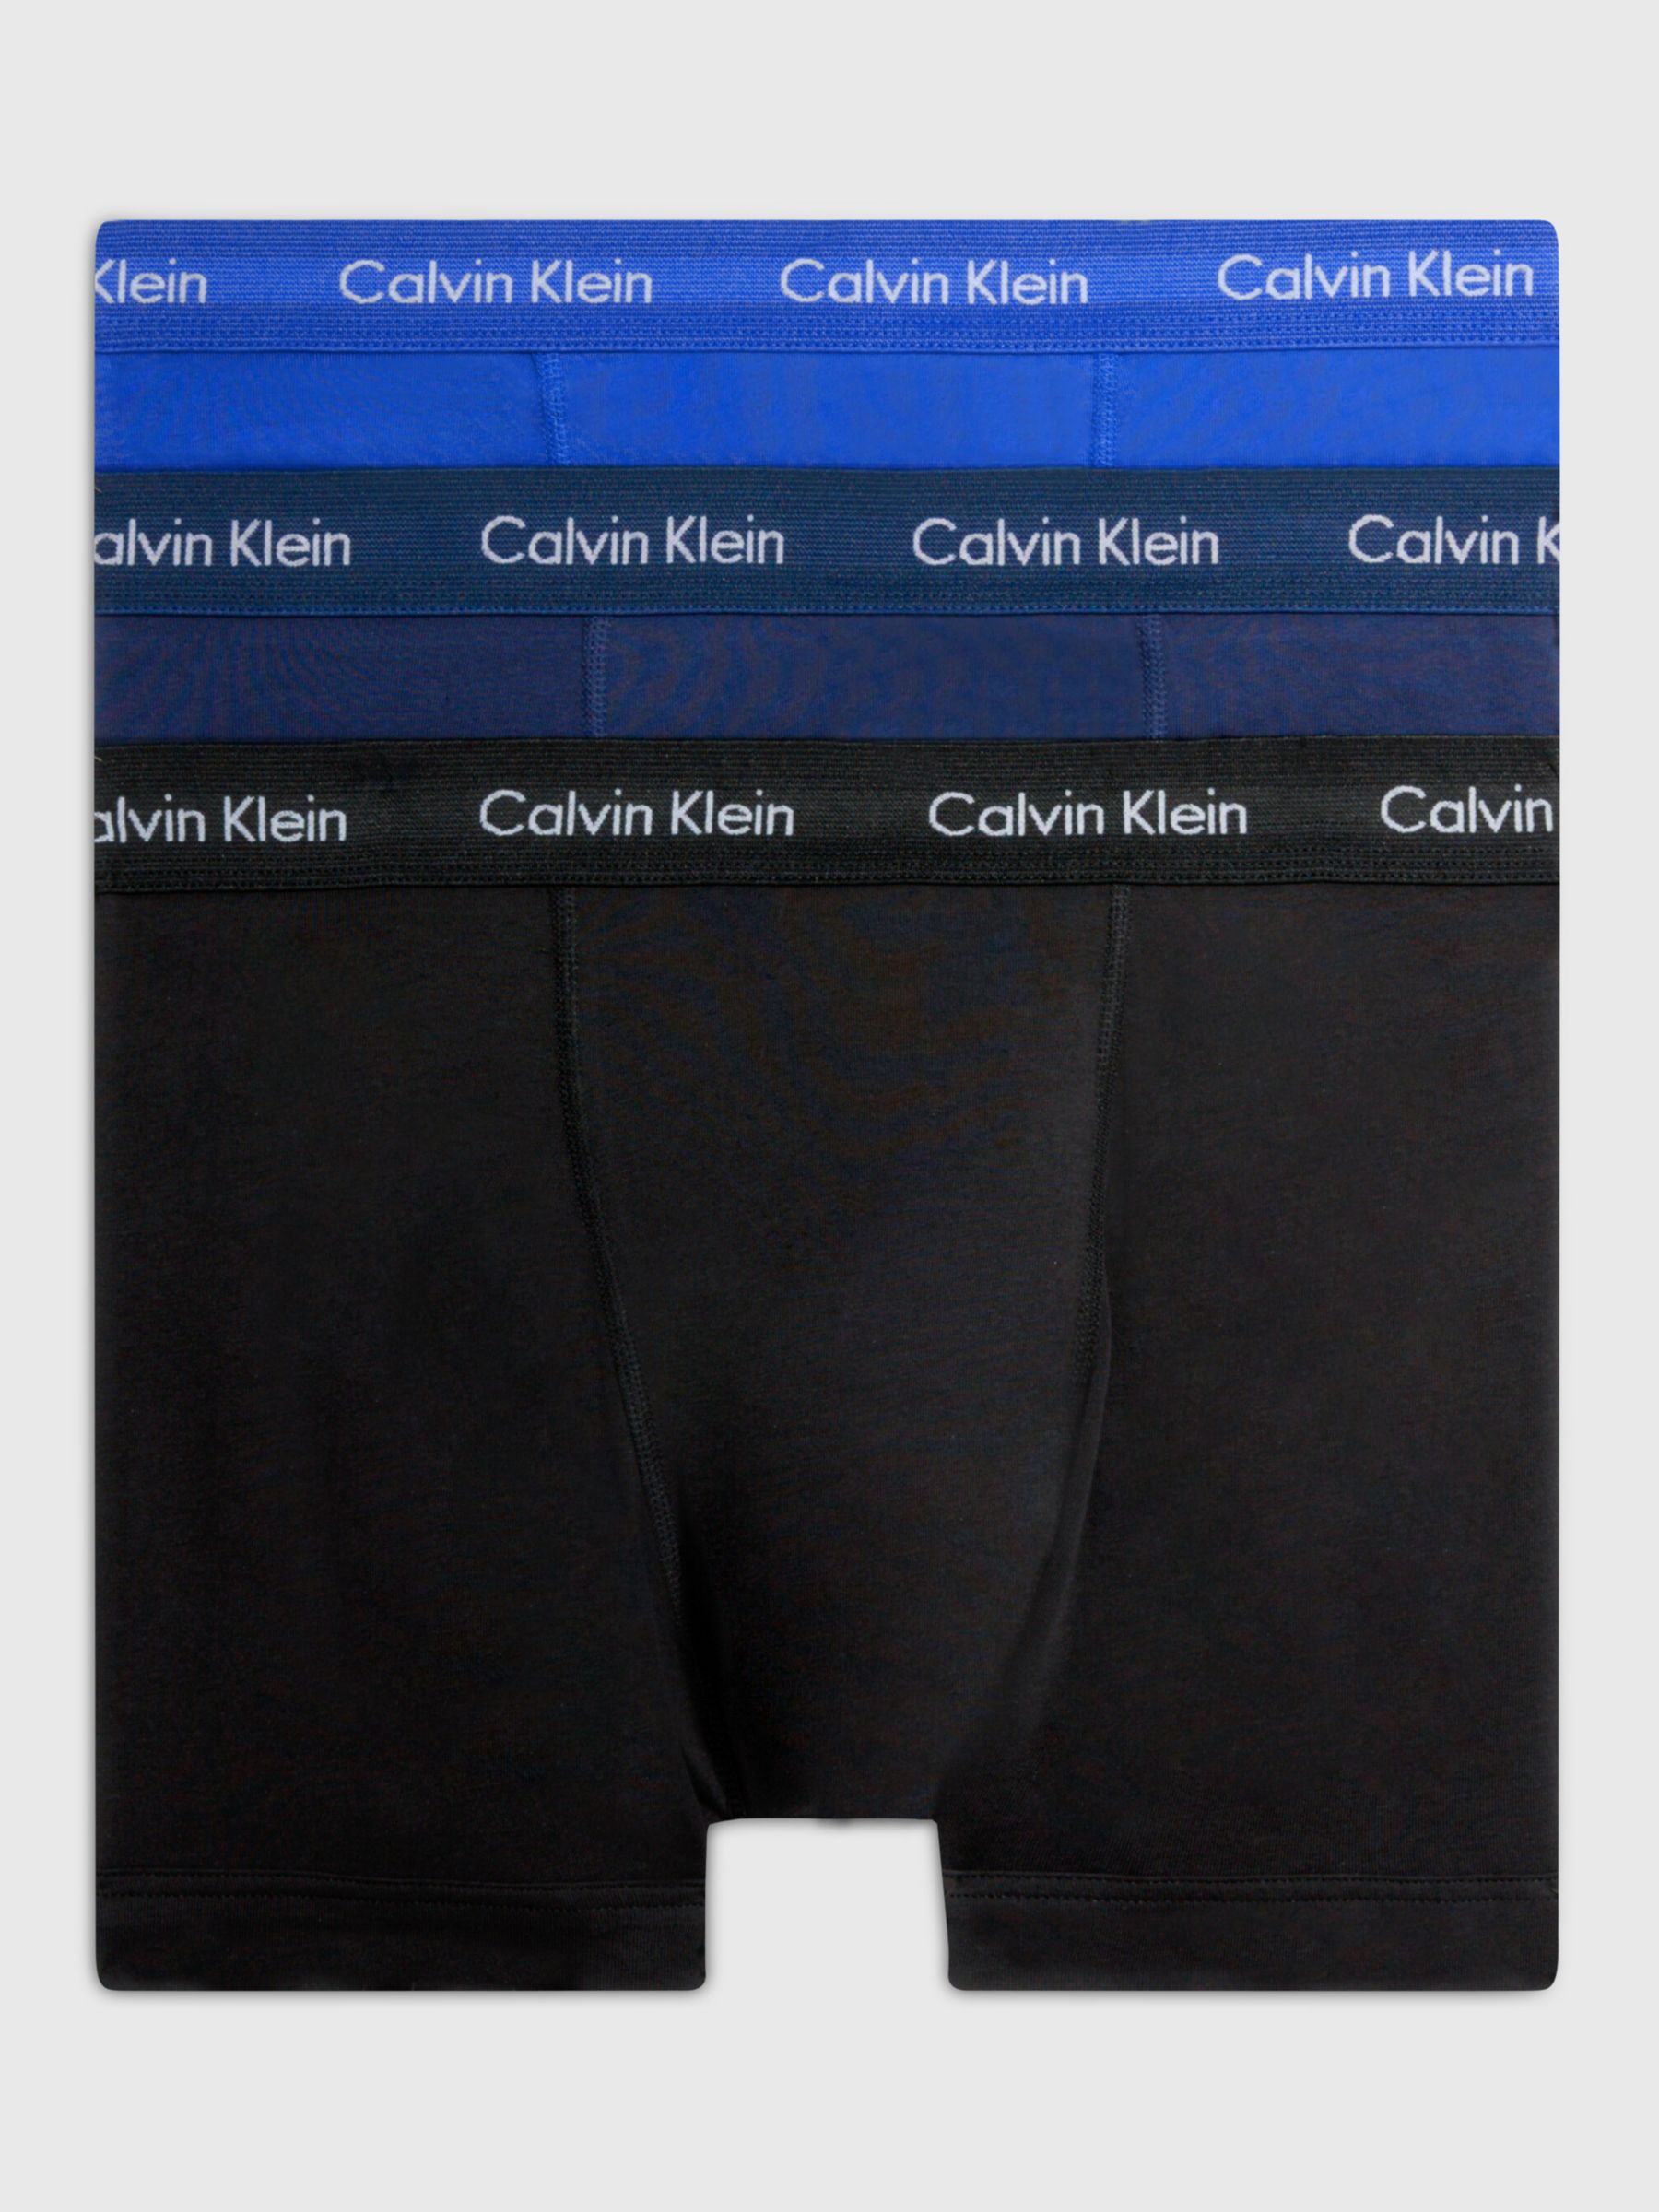 Calvin Klein Regular Cotton Stretch Trunks, Pack of 3, Black/Blue  Shadow/Cobalt at John Lewis & Partners